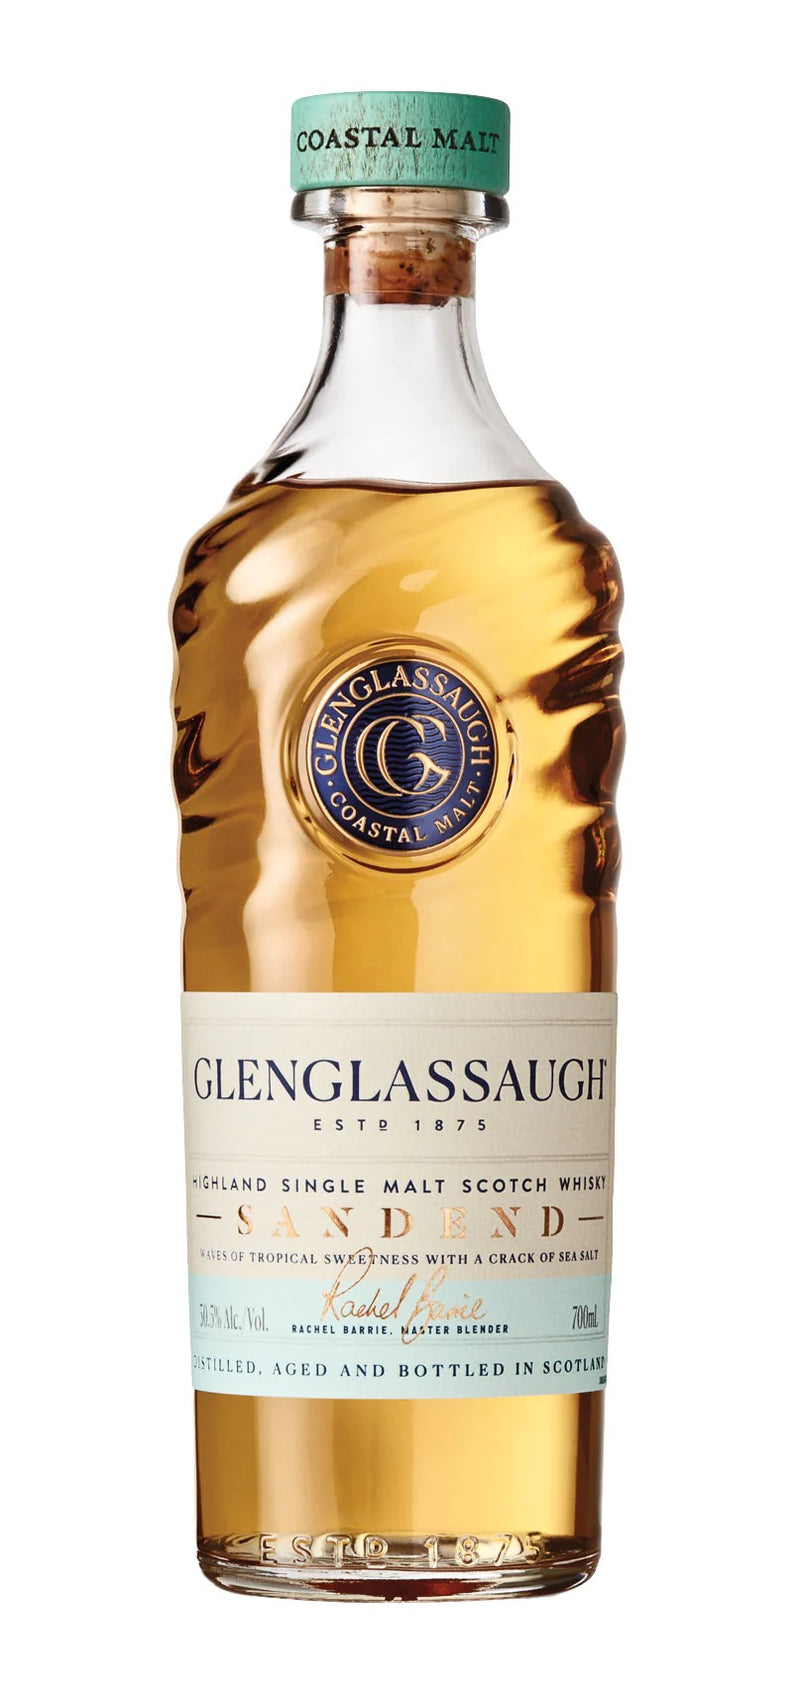 Glenglassaugh - Sandend – Still Spirit Ltd